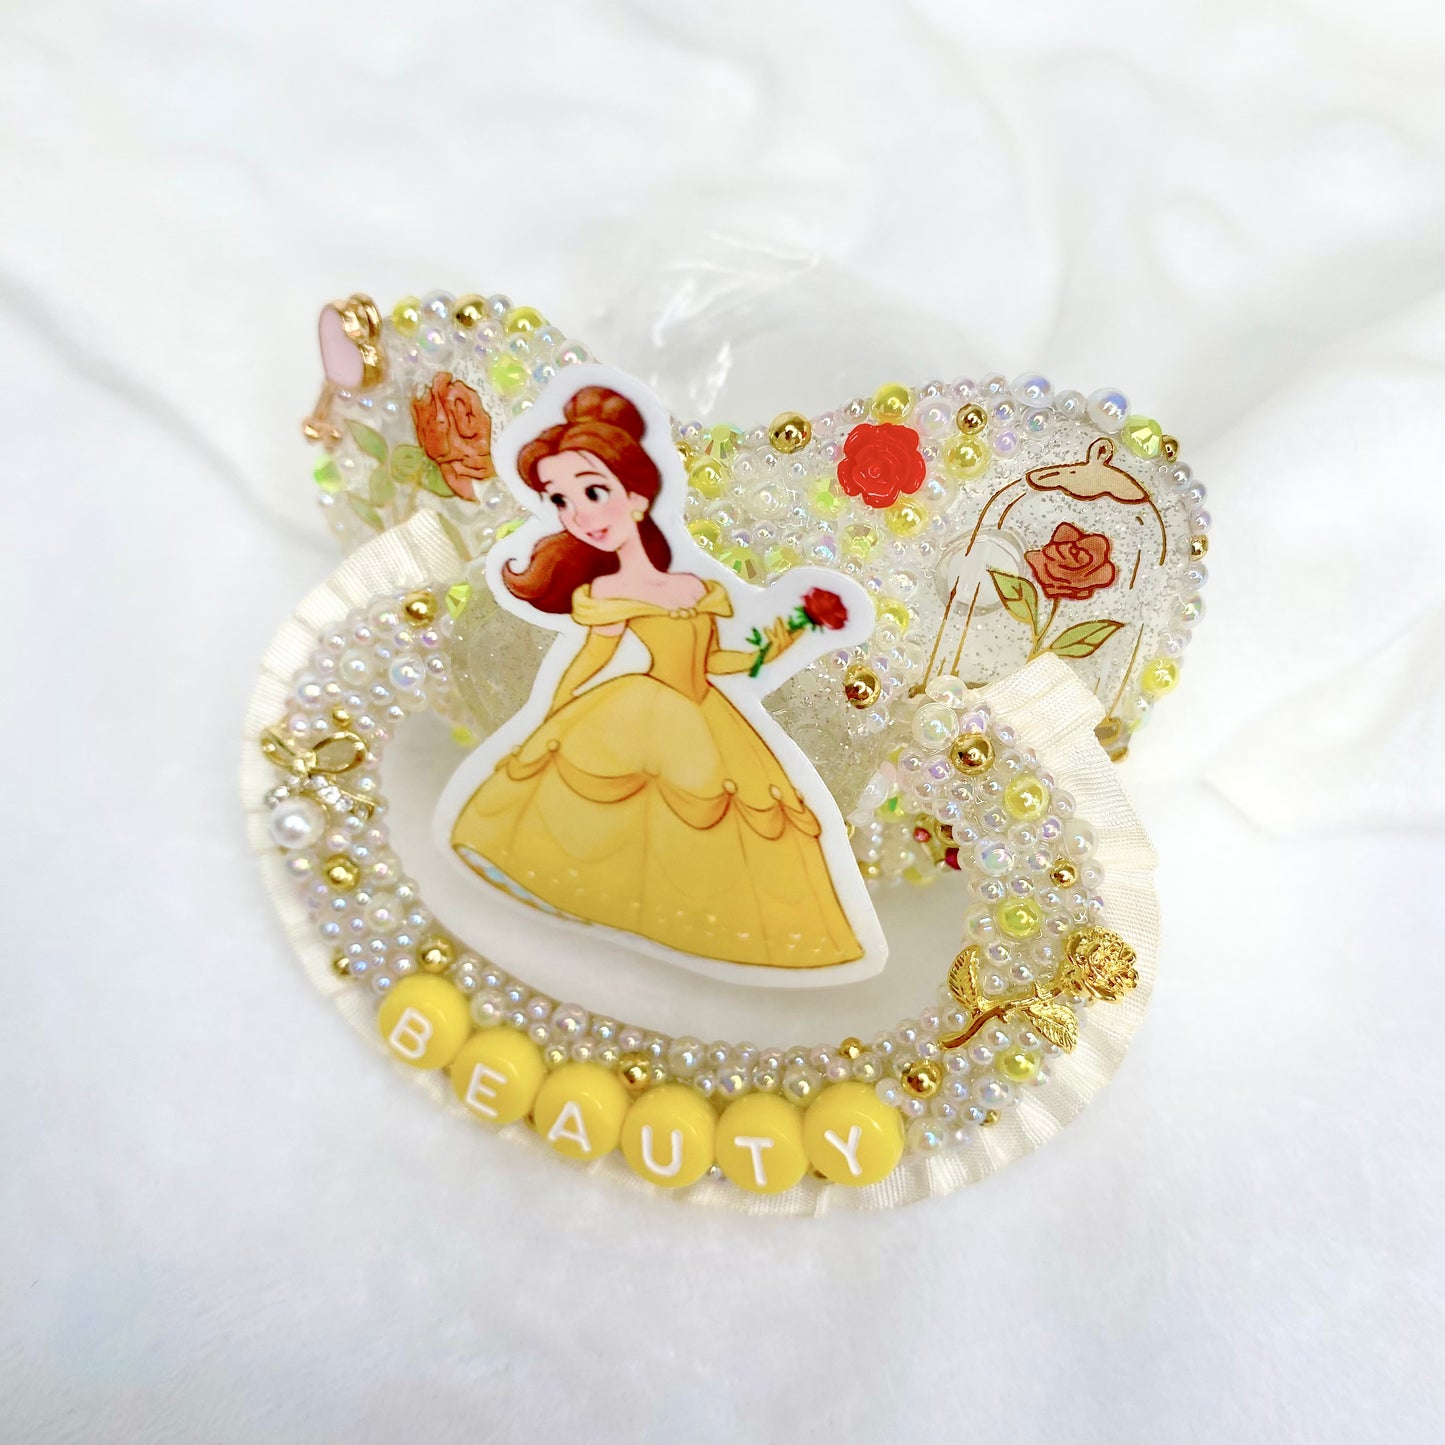 "Beauty" Princess belle - Adult pacifier